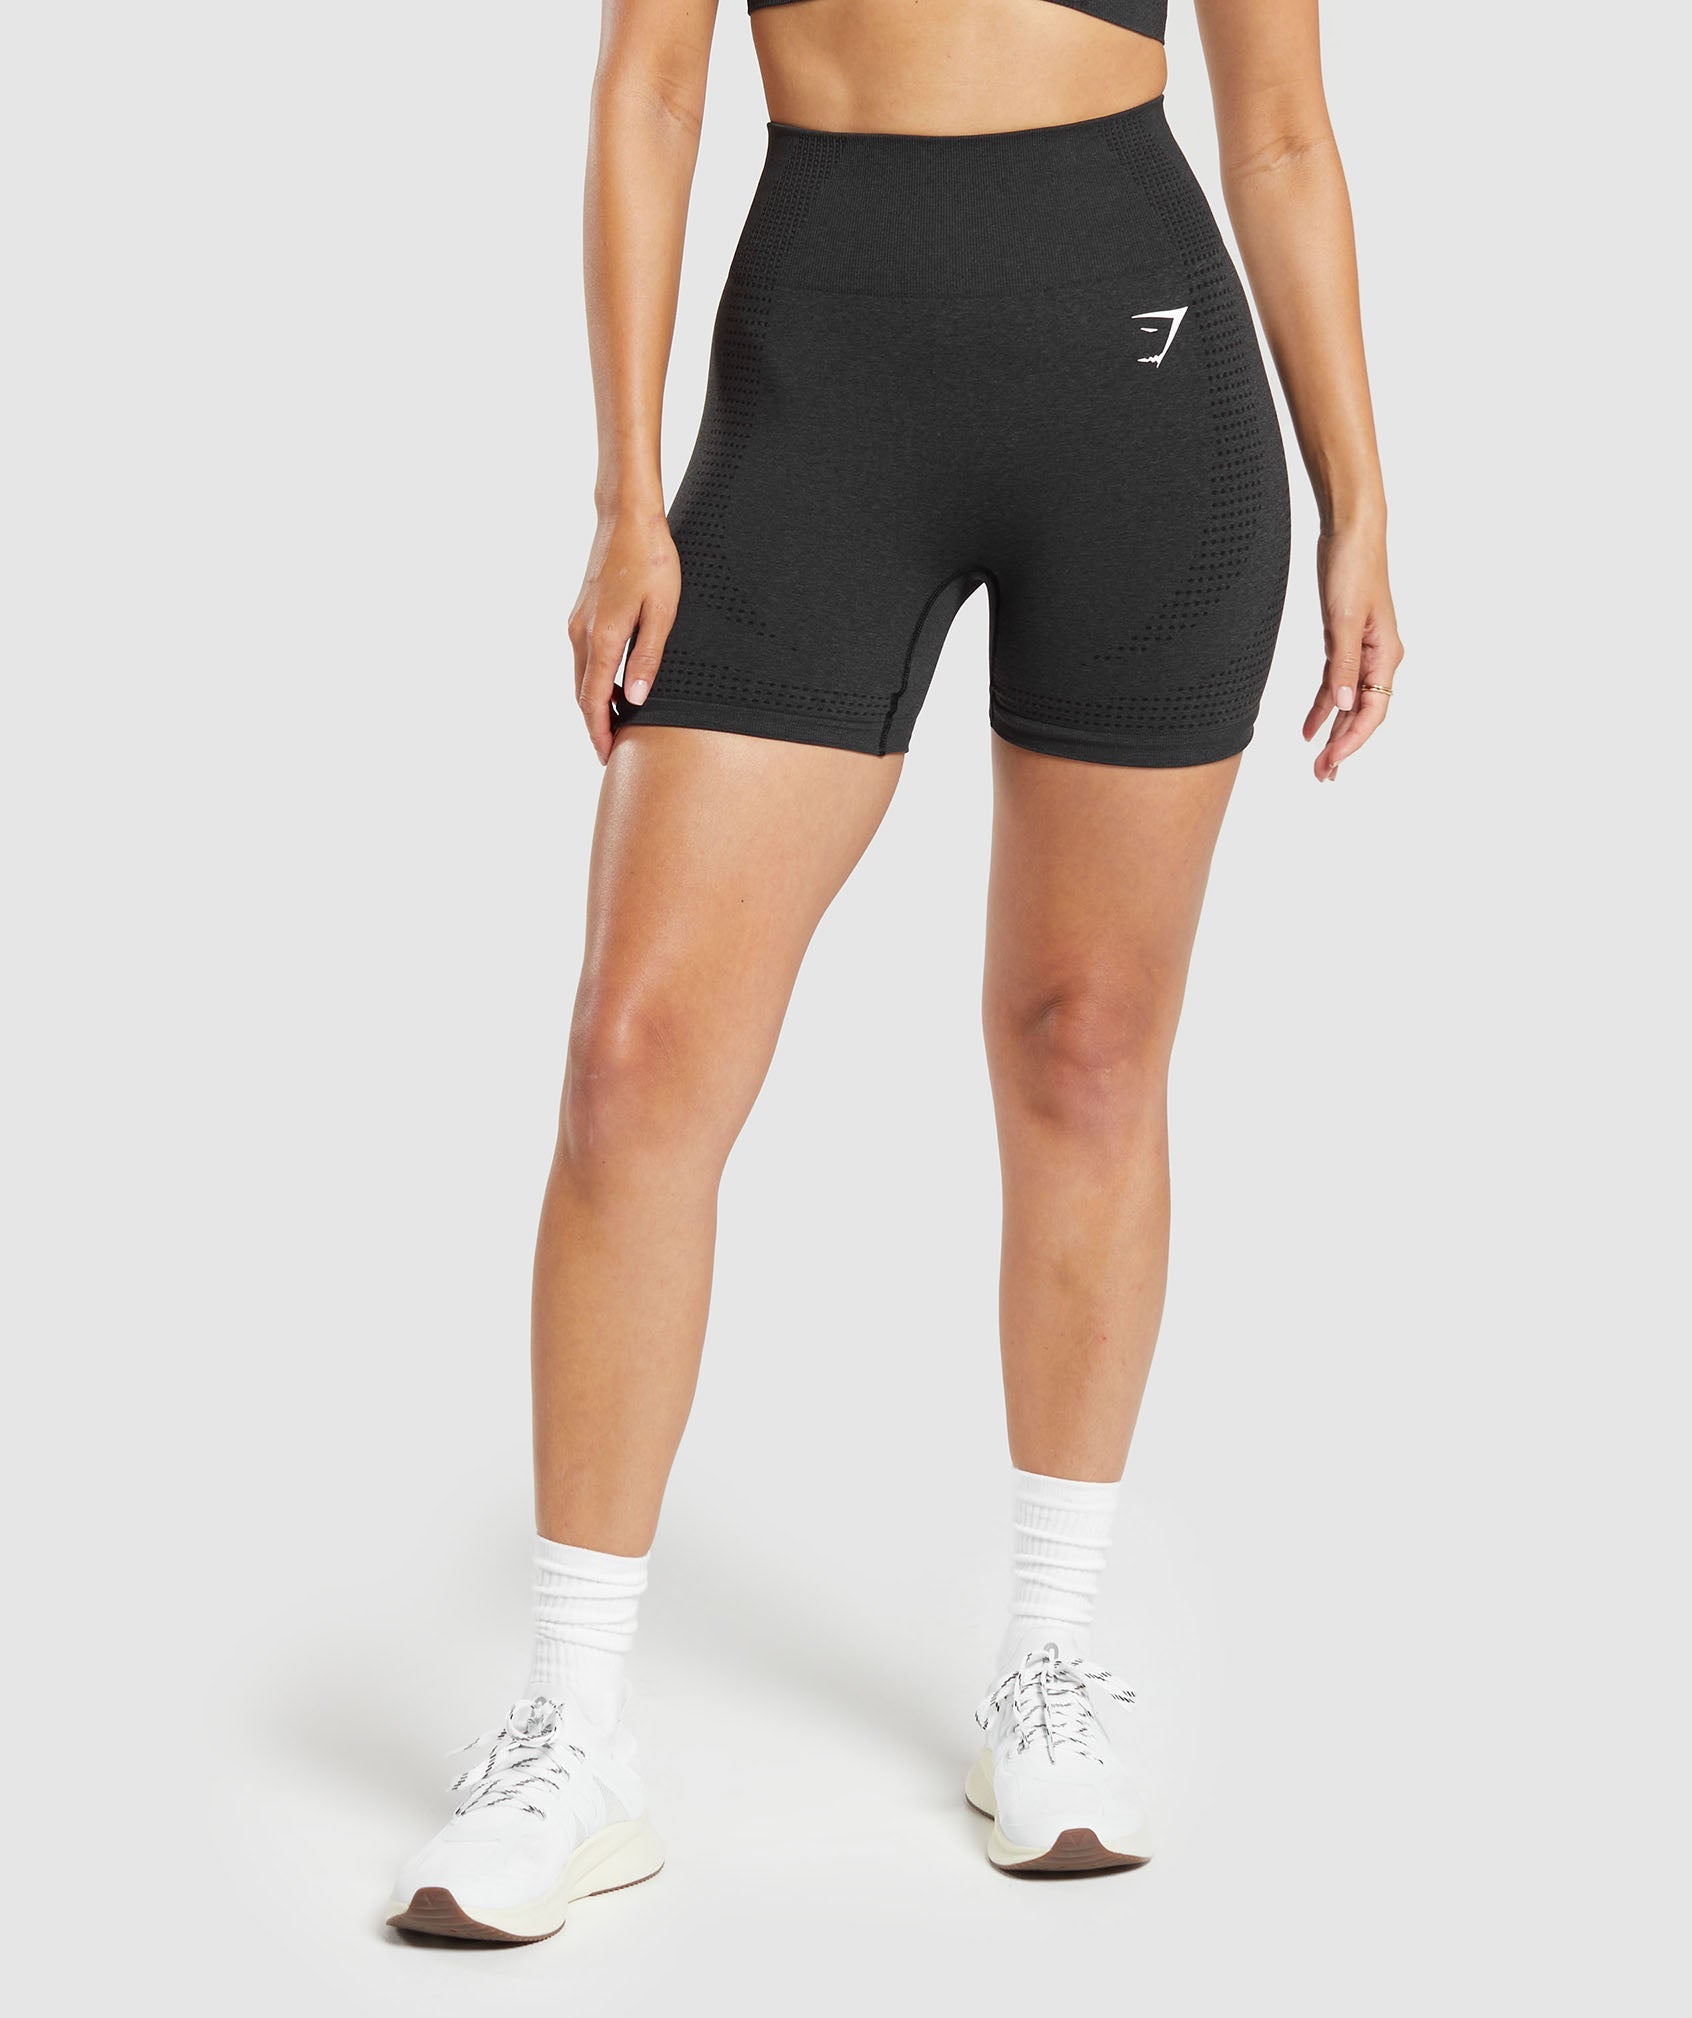 Hotpants Femme Sexy, Sport Yoga Shorts, Short de Sport Femme Push